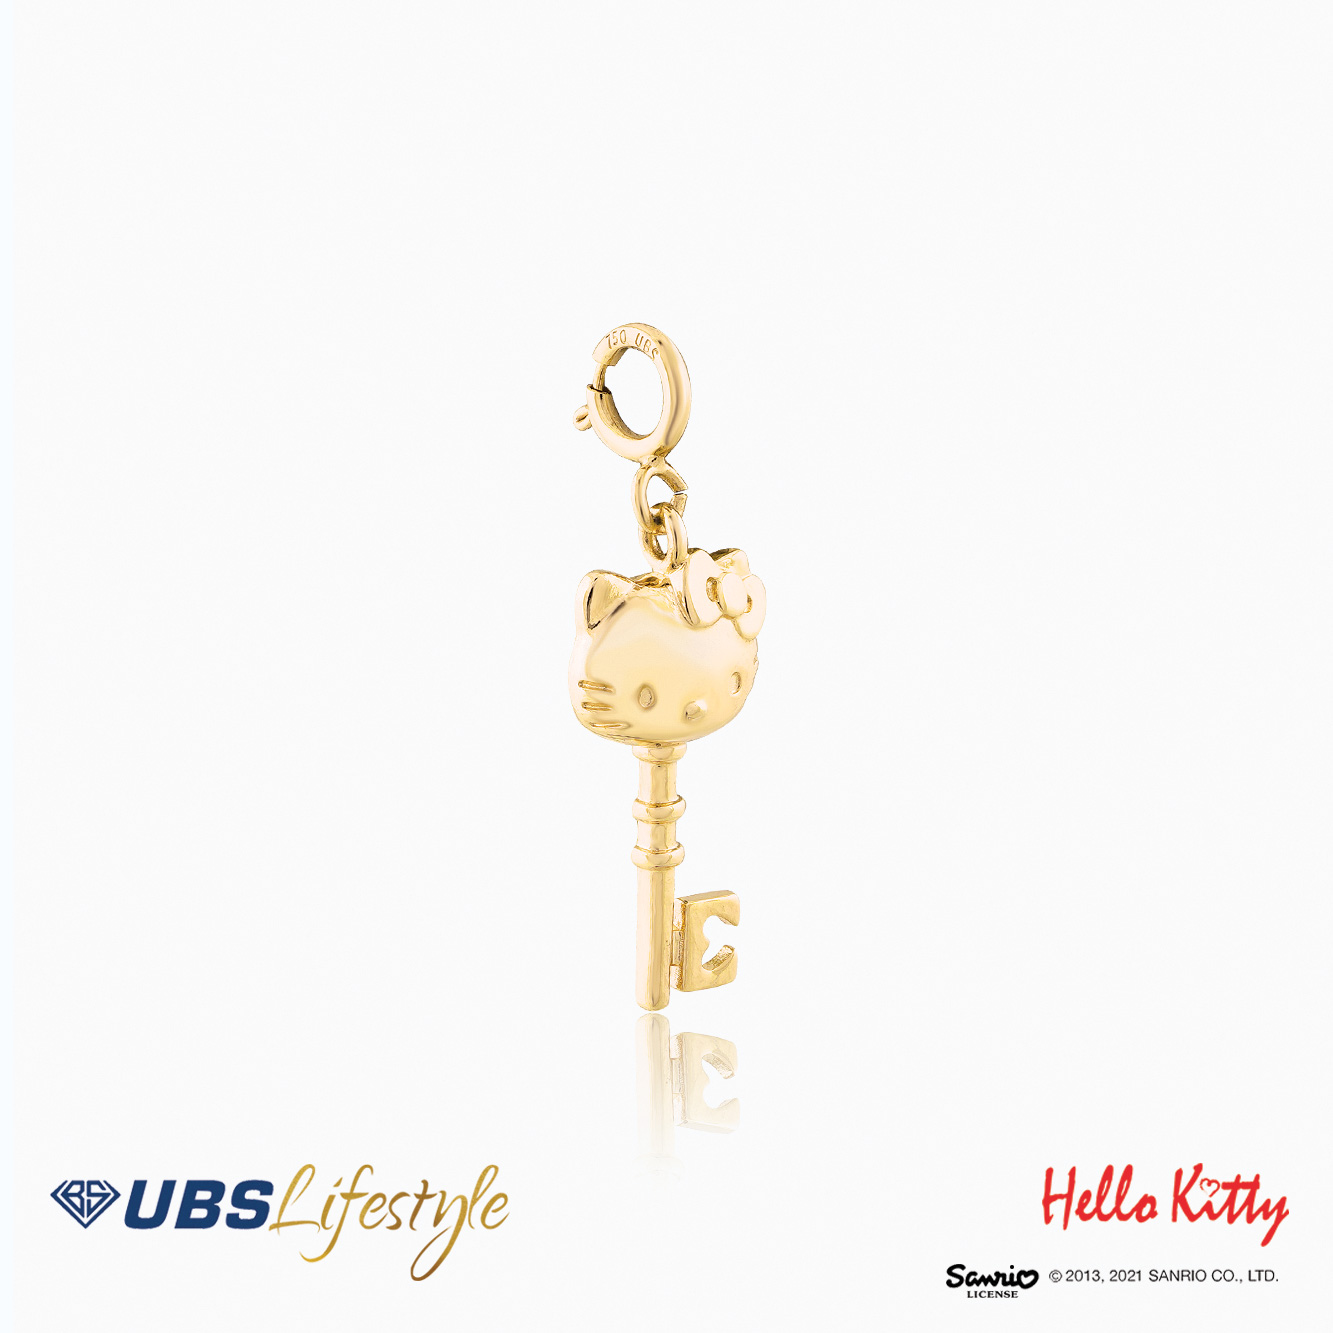 UBS Liontin Emas Sanrio Hello Kitty - Cmz0003 - 17K